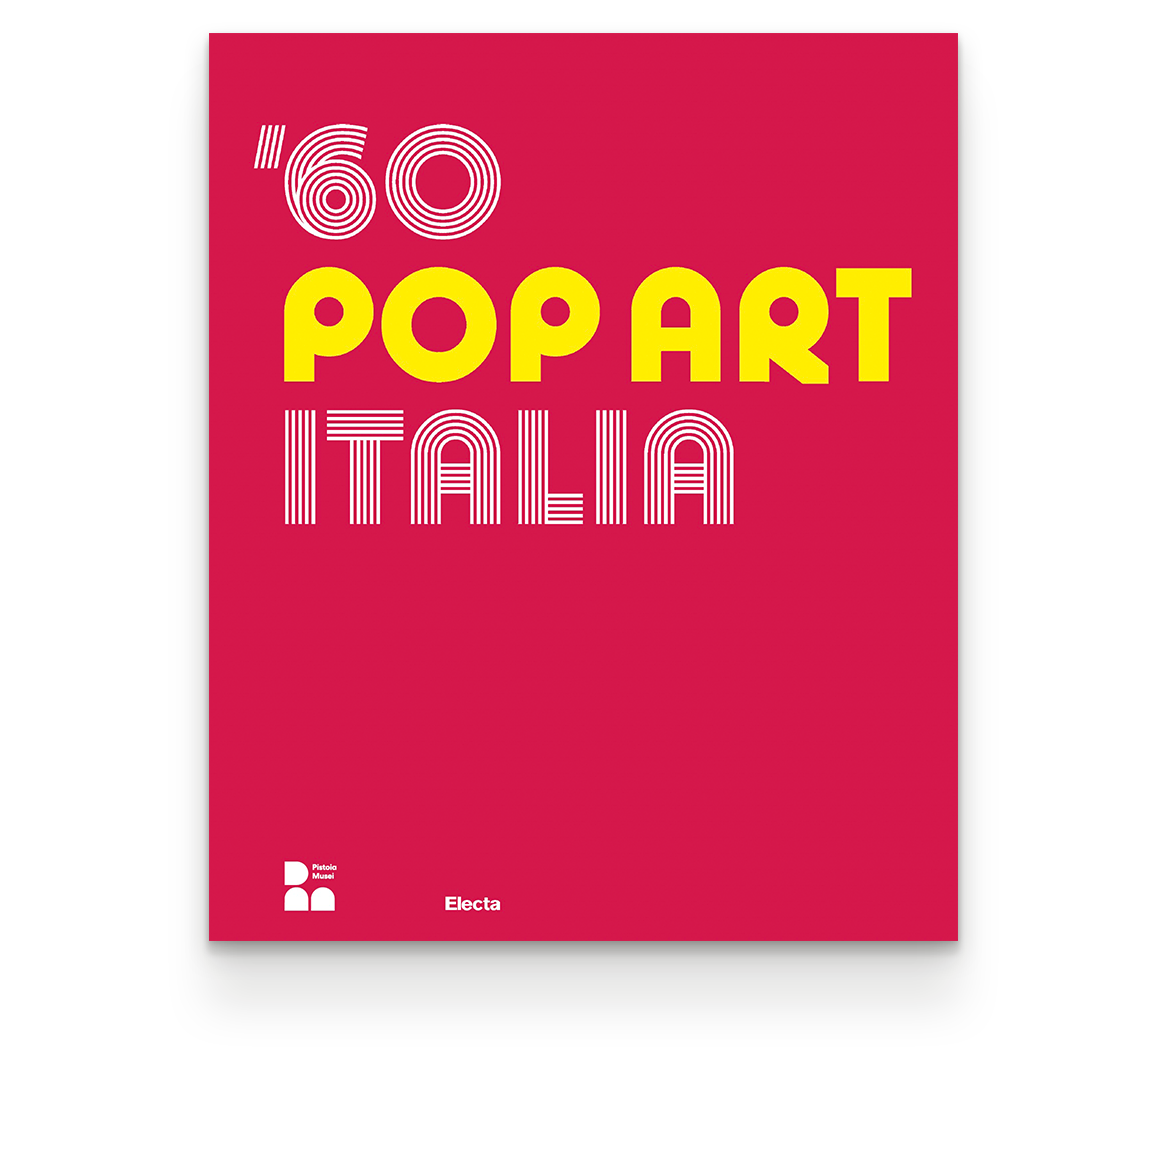 ’60 POP ART ITALIA